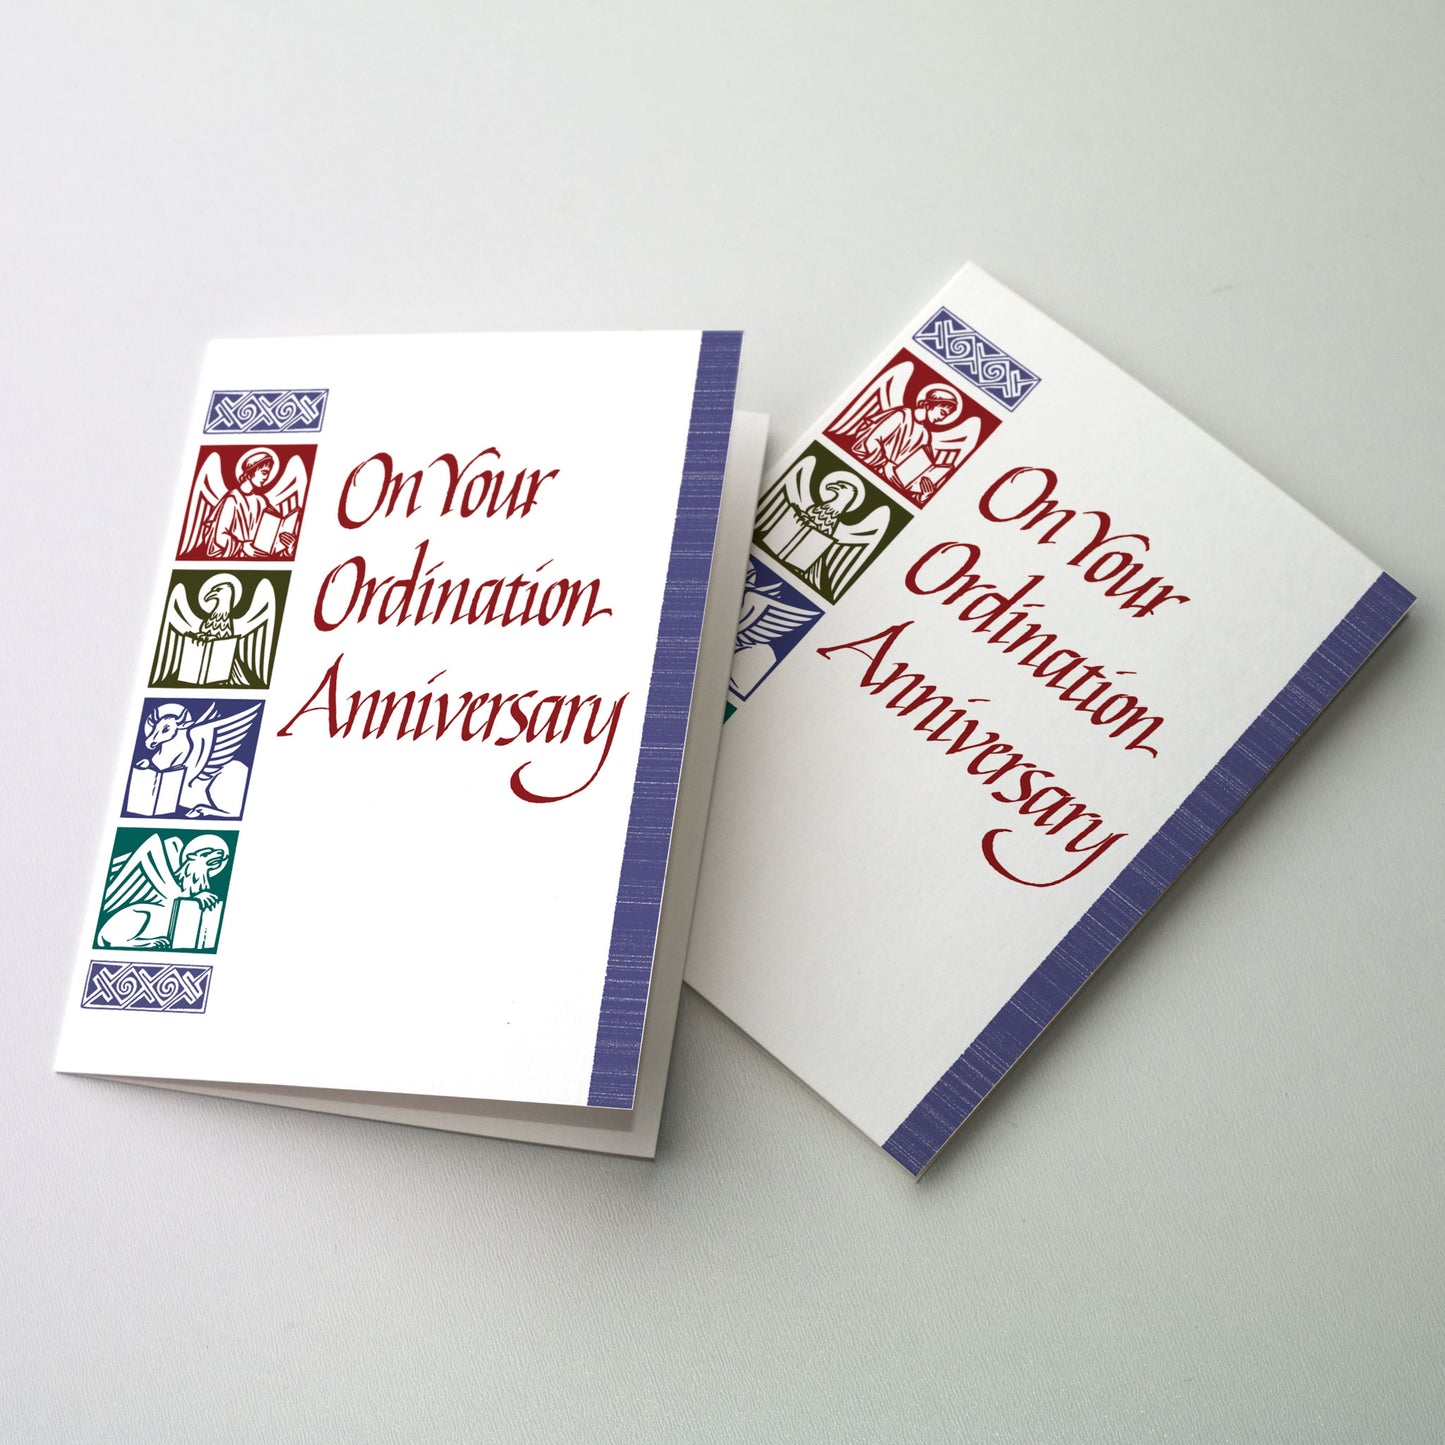 On Your Ordination Anniversary - Ordination Anniversary Card